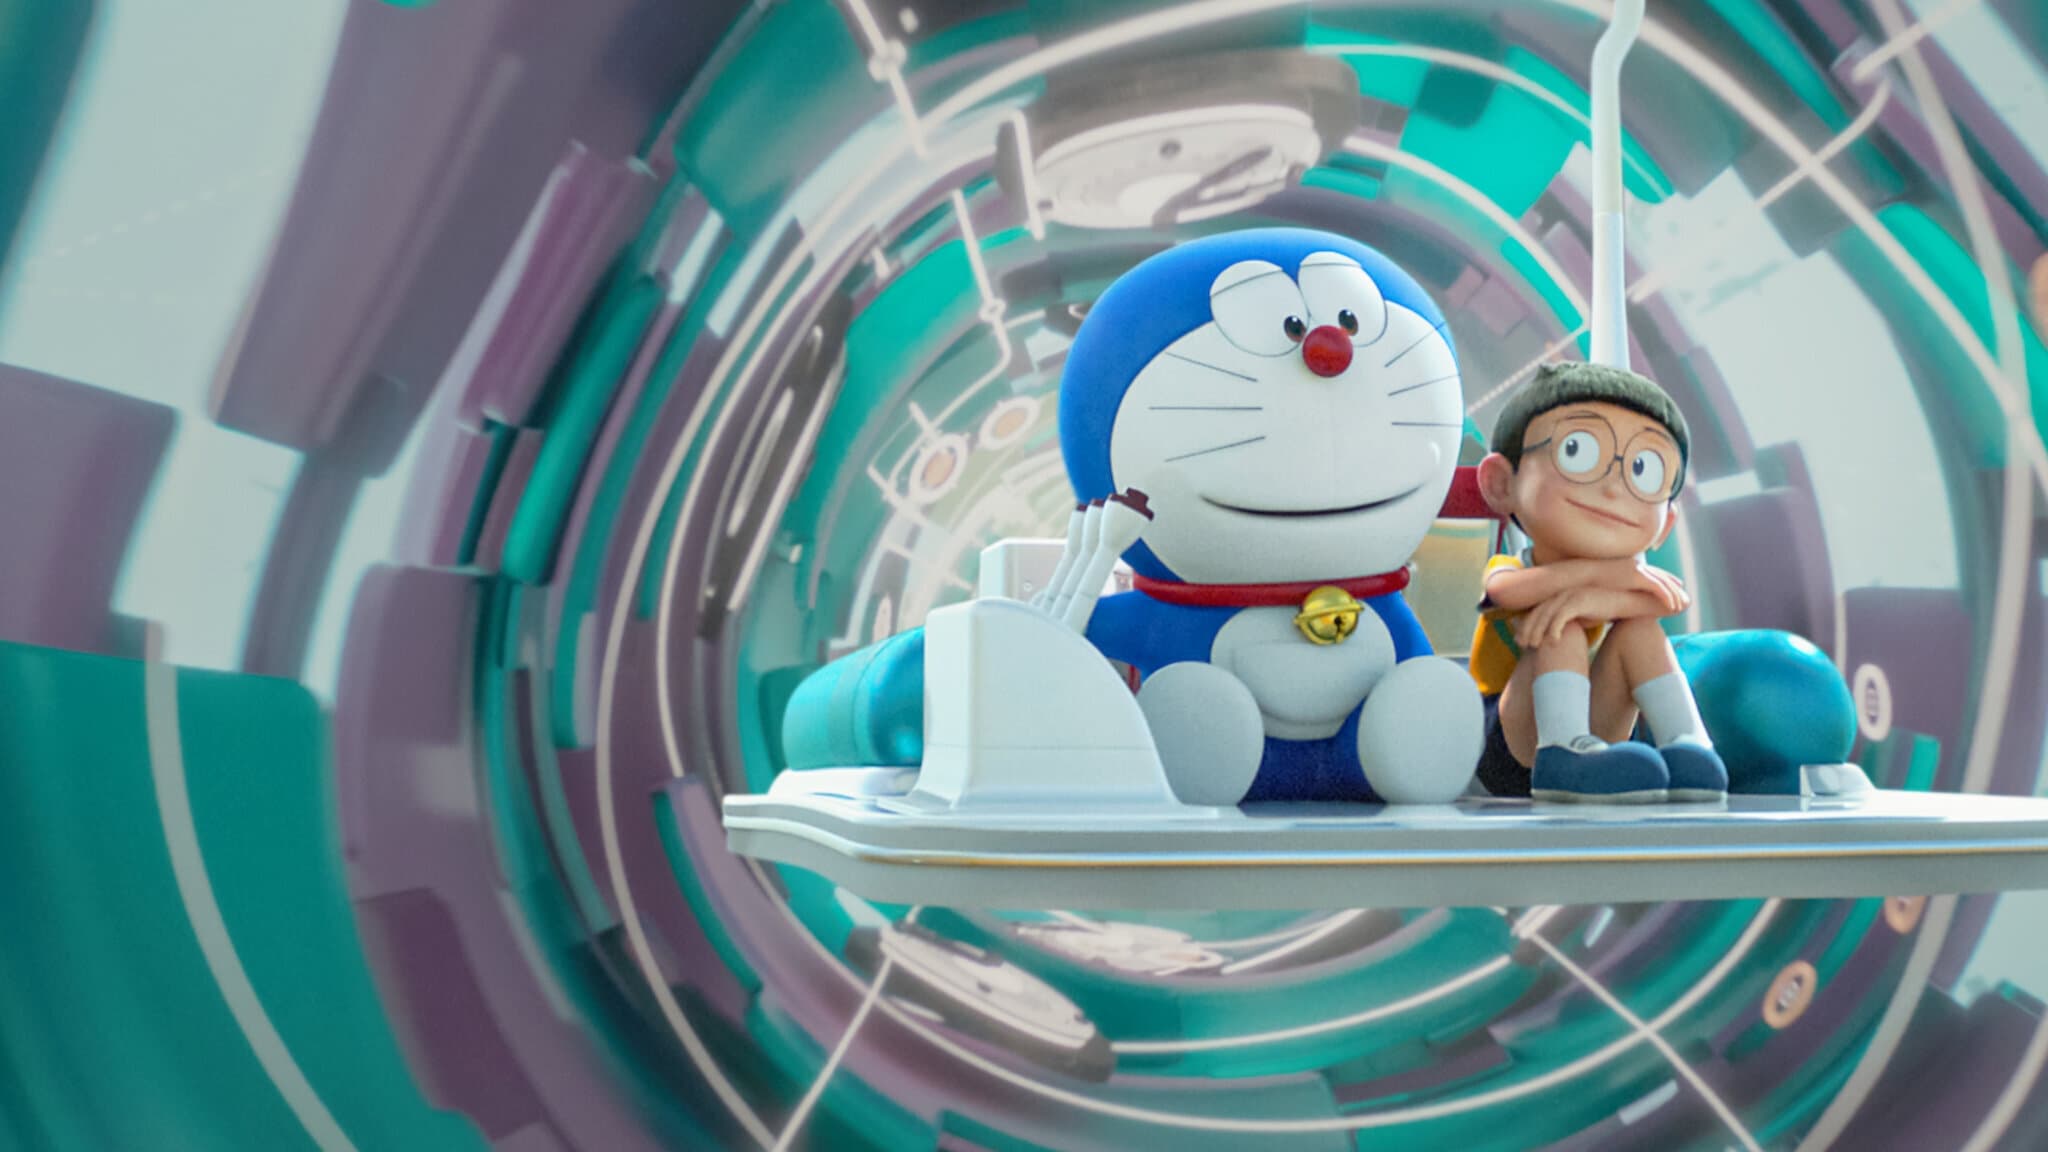 Tarts velem, Doraemon 2.